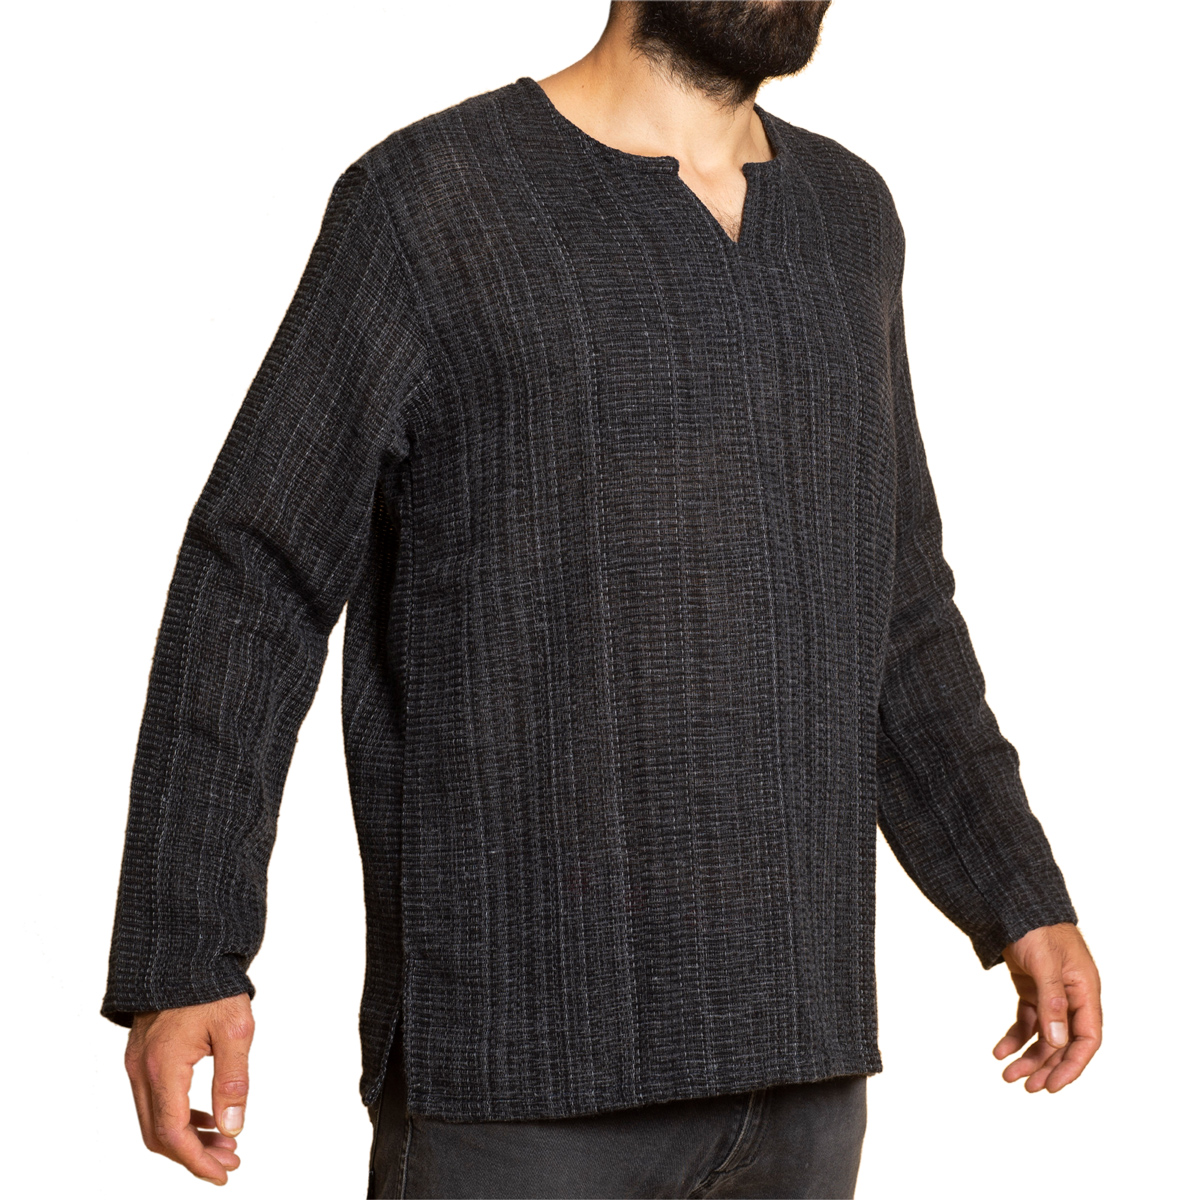 Farmer shirt woven | short or long sleeve